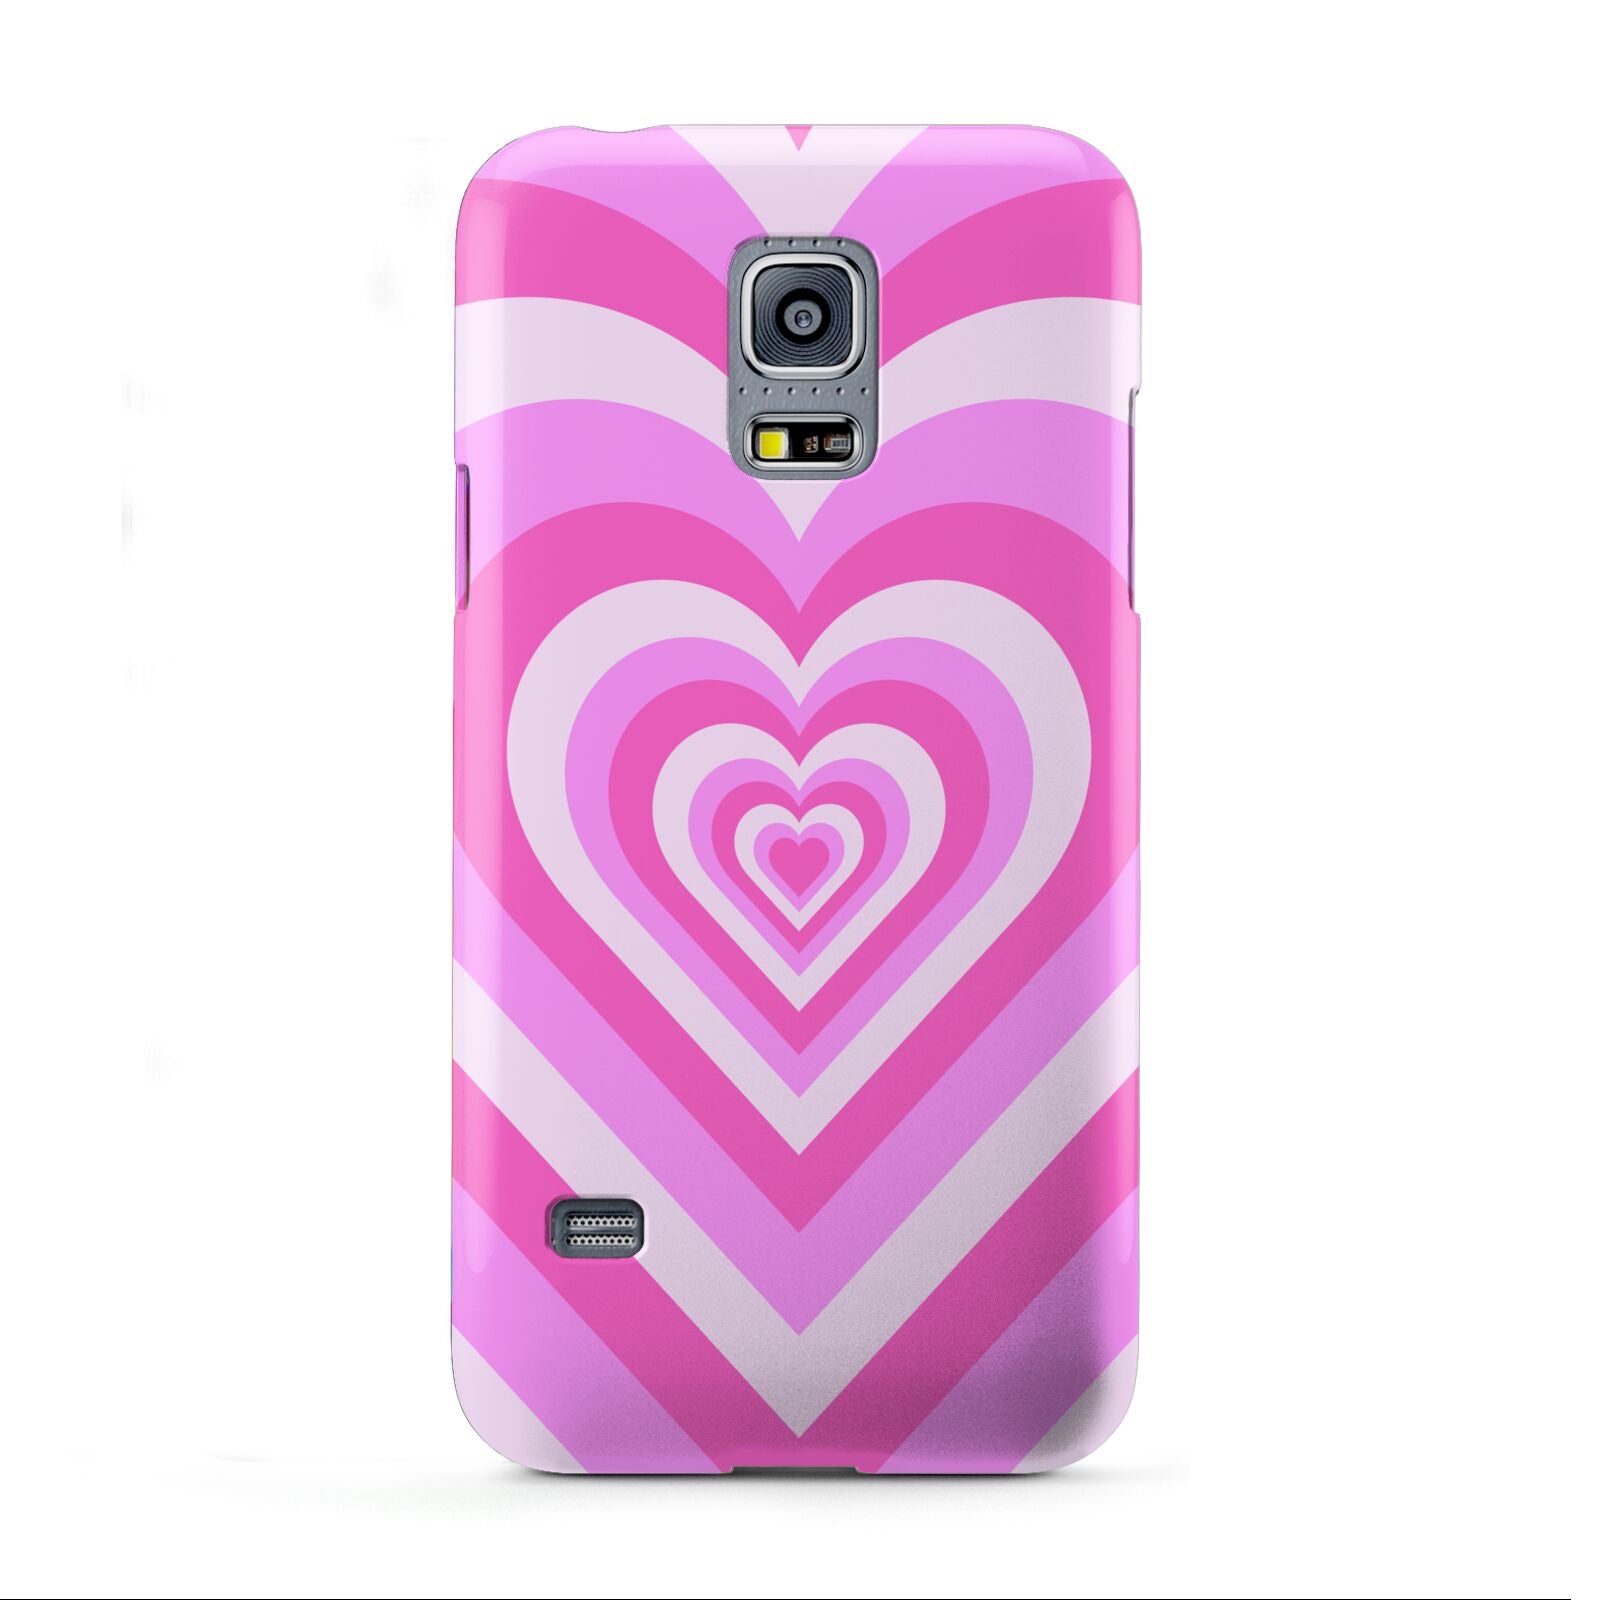 Aesthetic Heart Samsung Galaxy S5 Mini Case